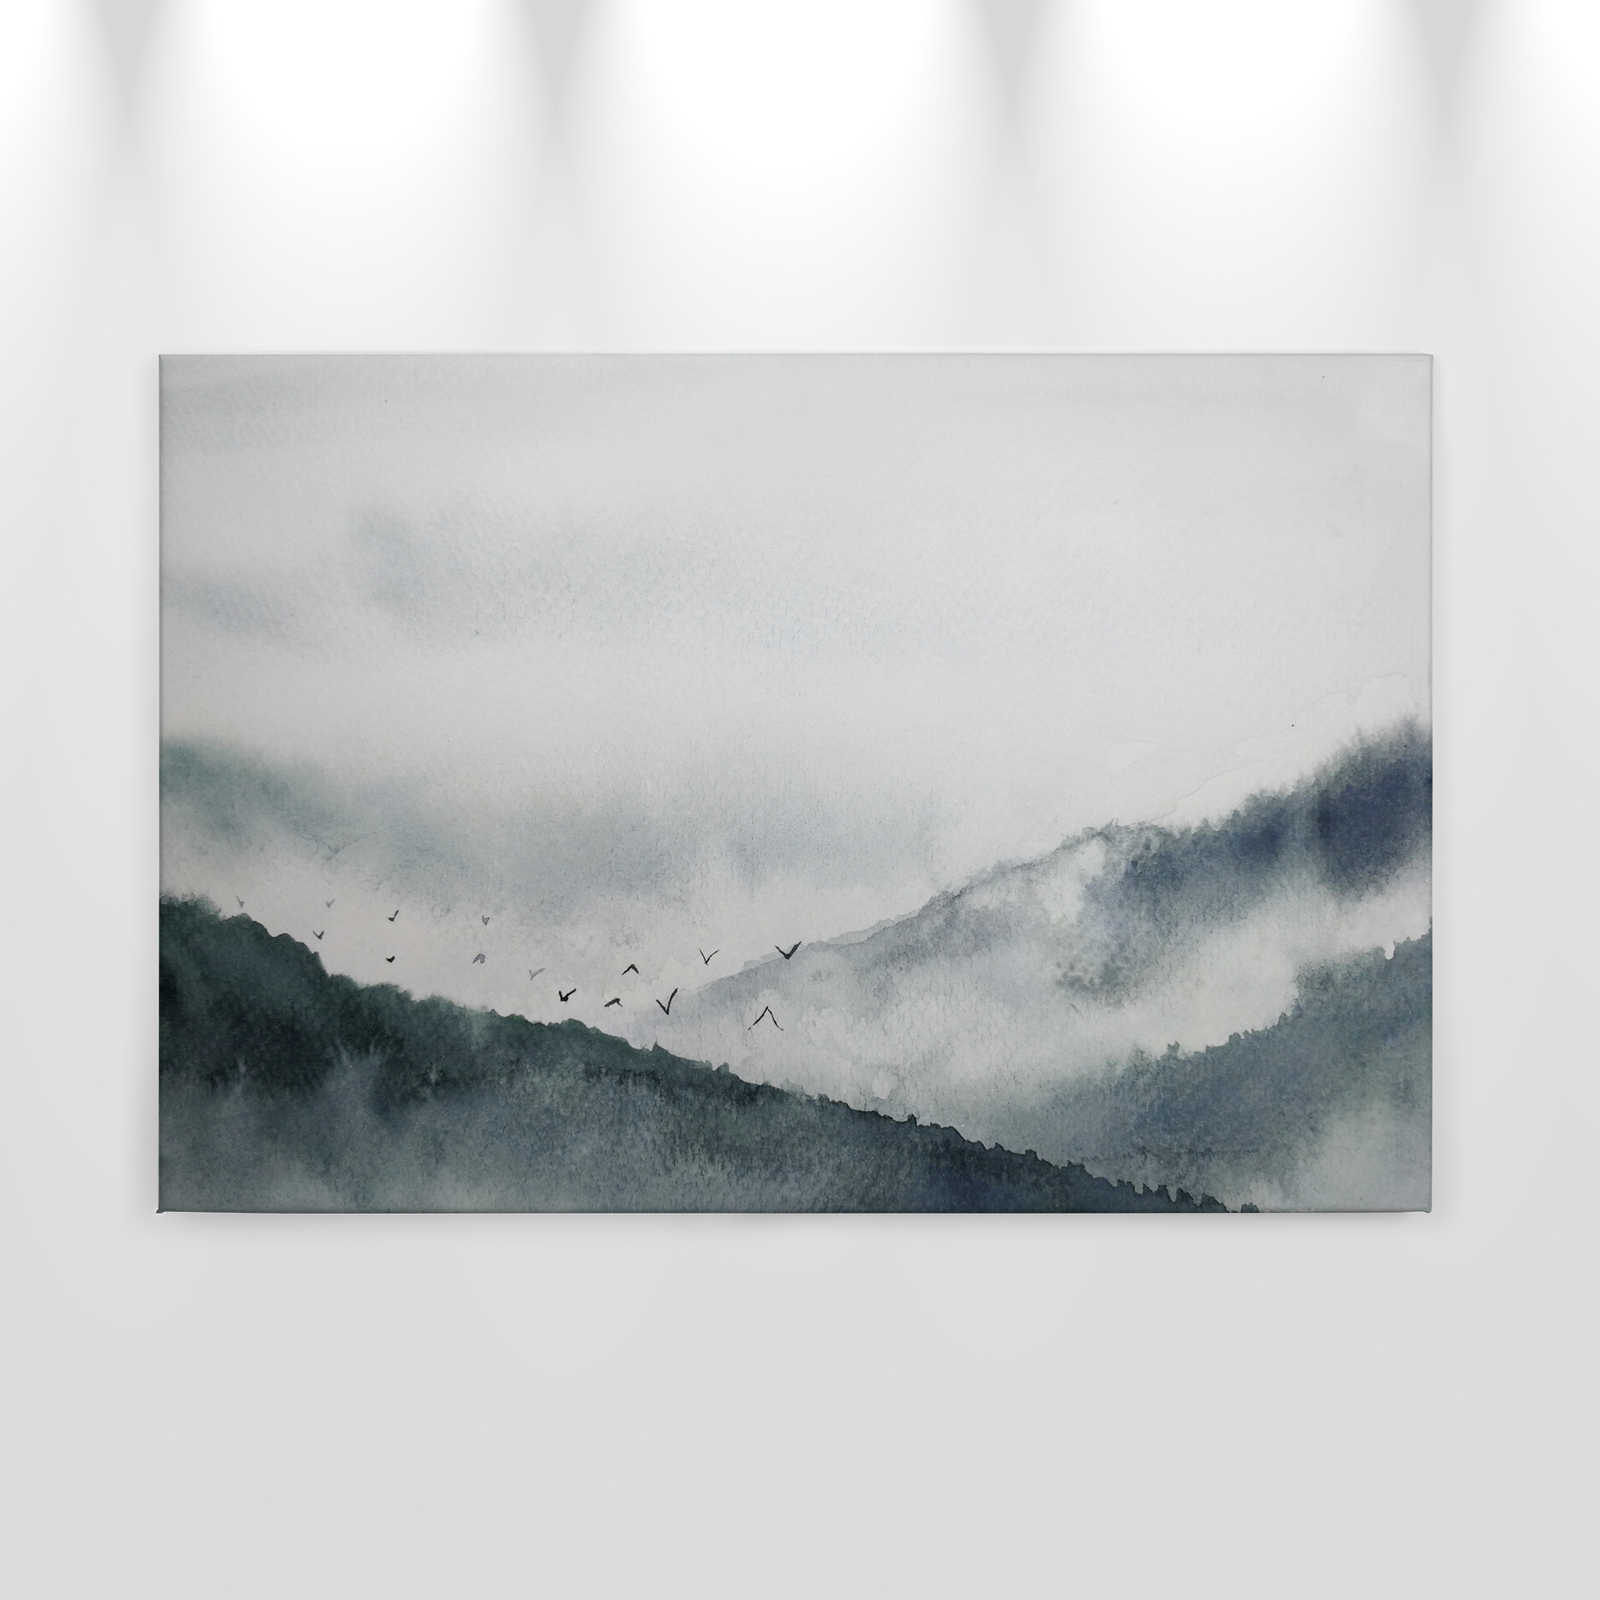             Lienzo con paisaje de niebla en estilo pictórico | gris, negro - 0,90 m x 0,60 m
        